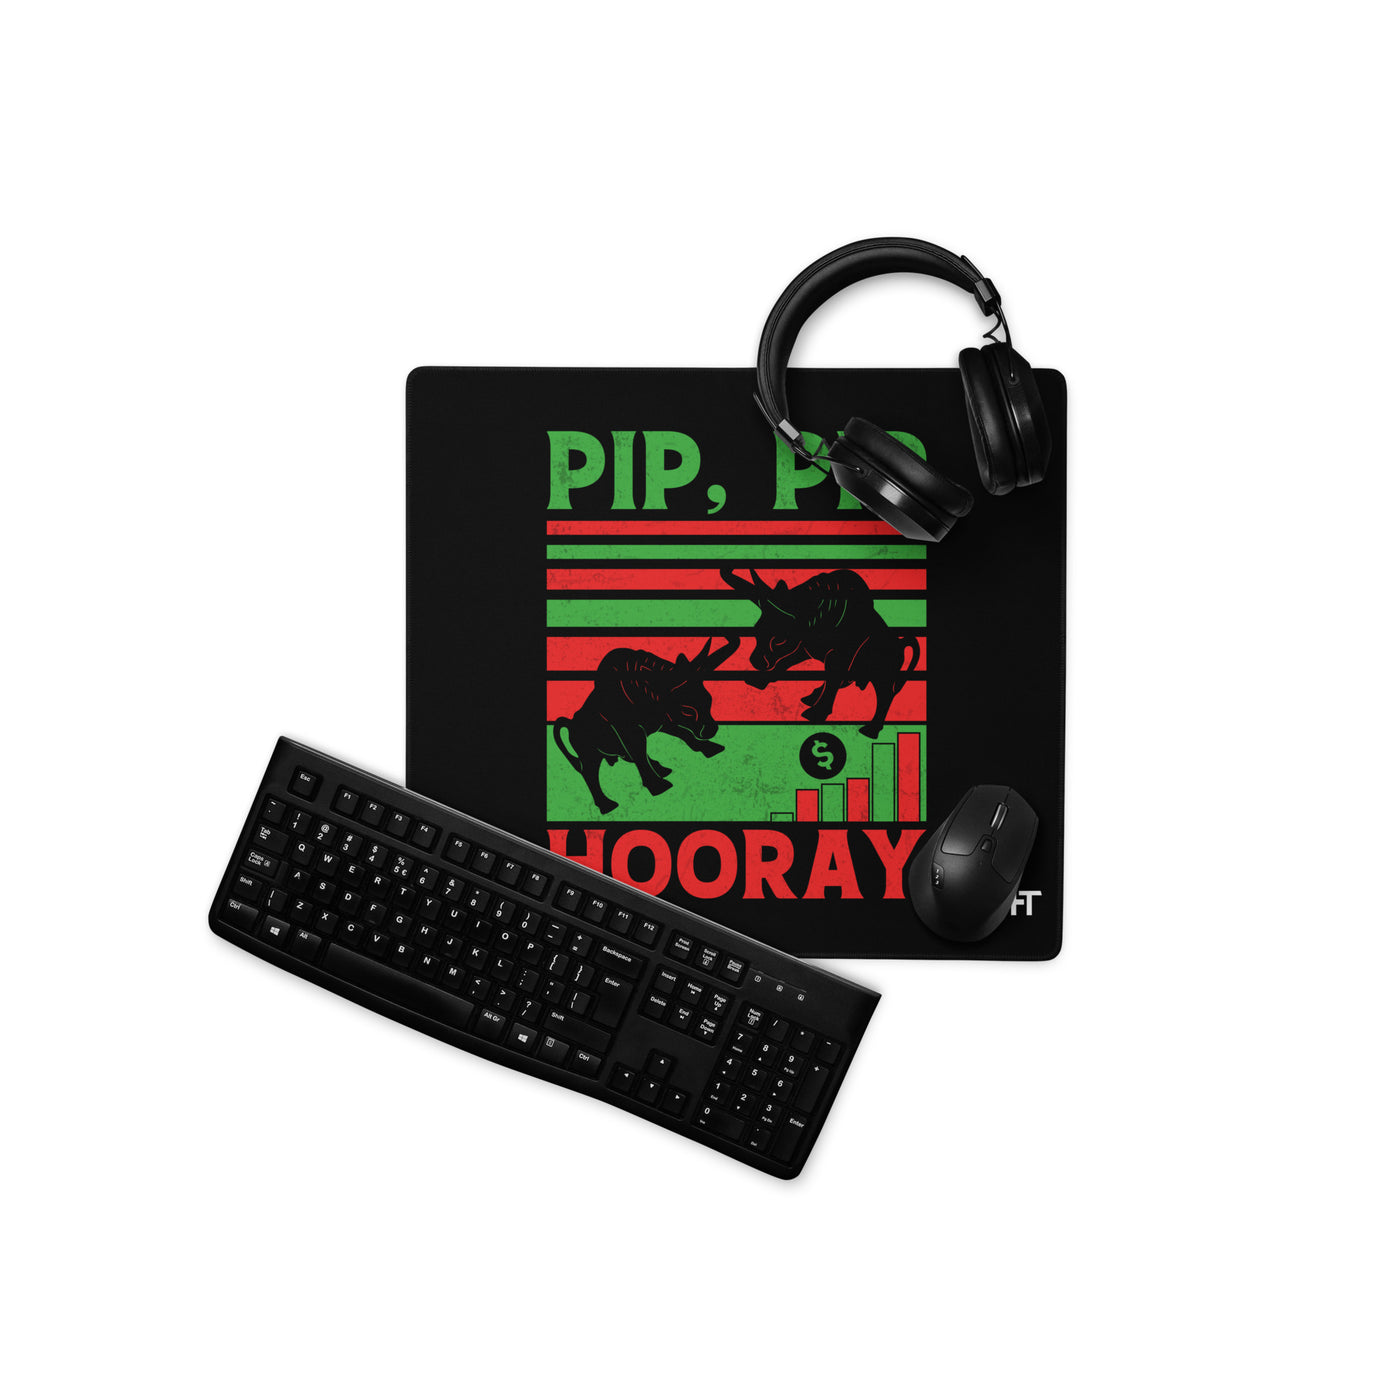 Pip, Pip Hooray - Desk Mat